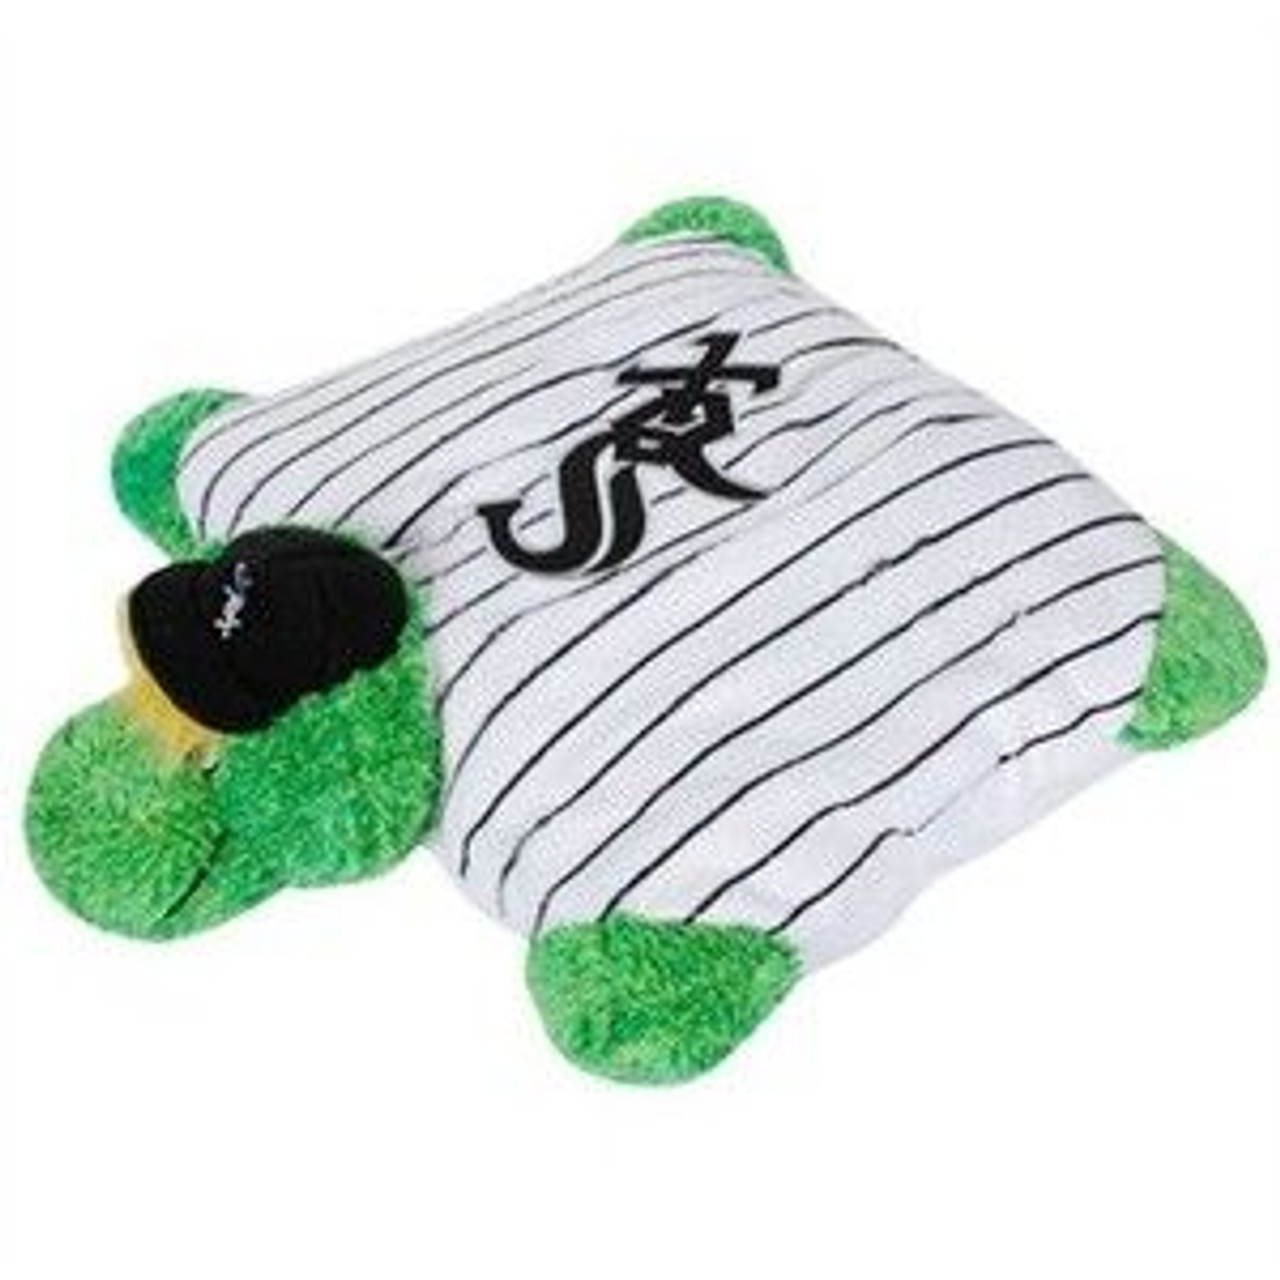 Chicago White Sox Pillow Pet  Animal pillows, White sox baseball